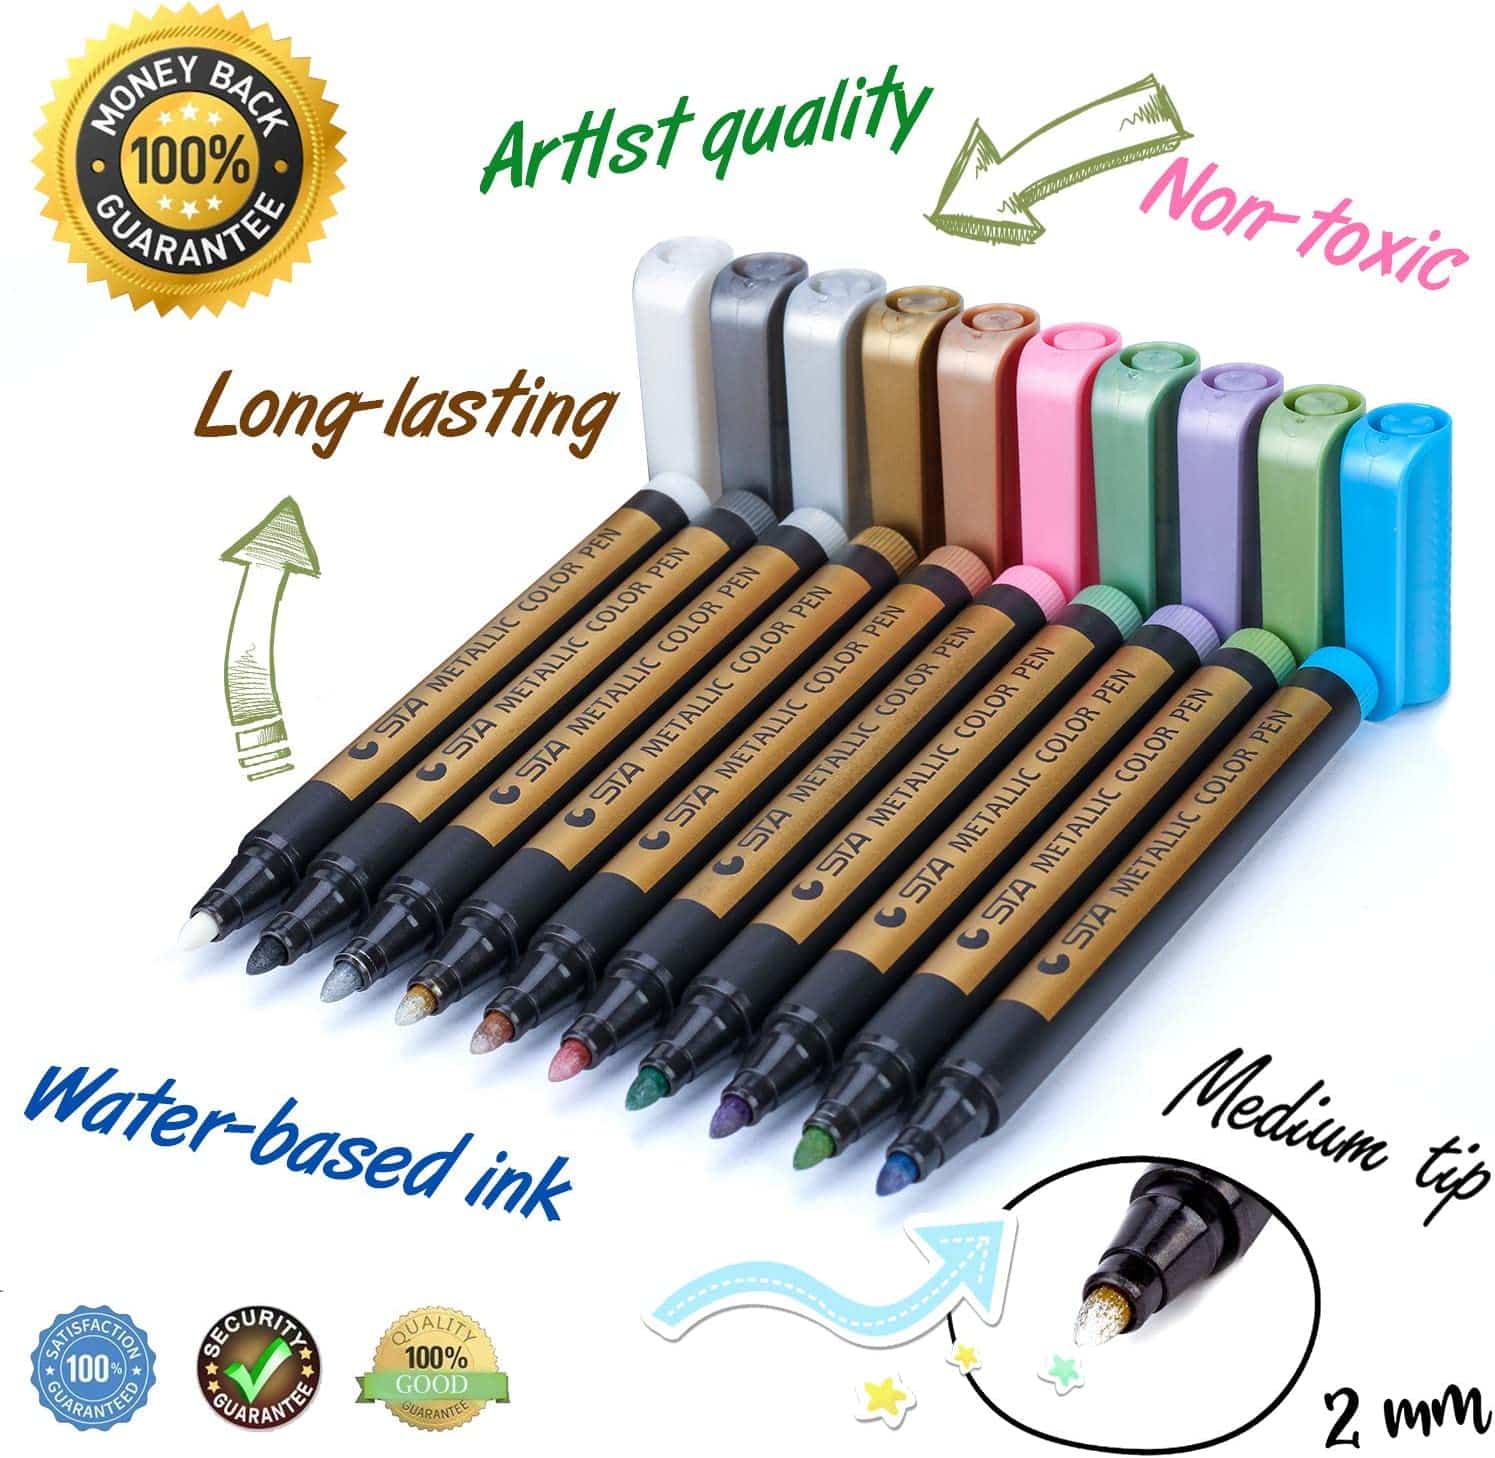 MUJINHUA Metallic Marker Pens features